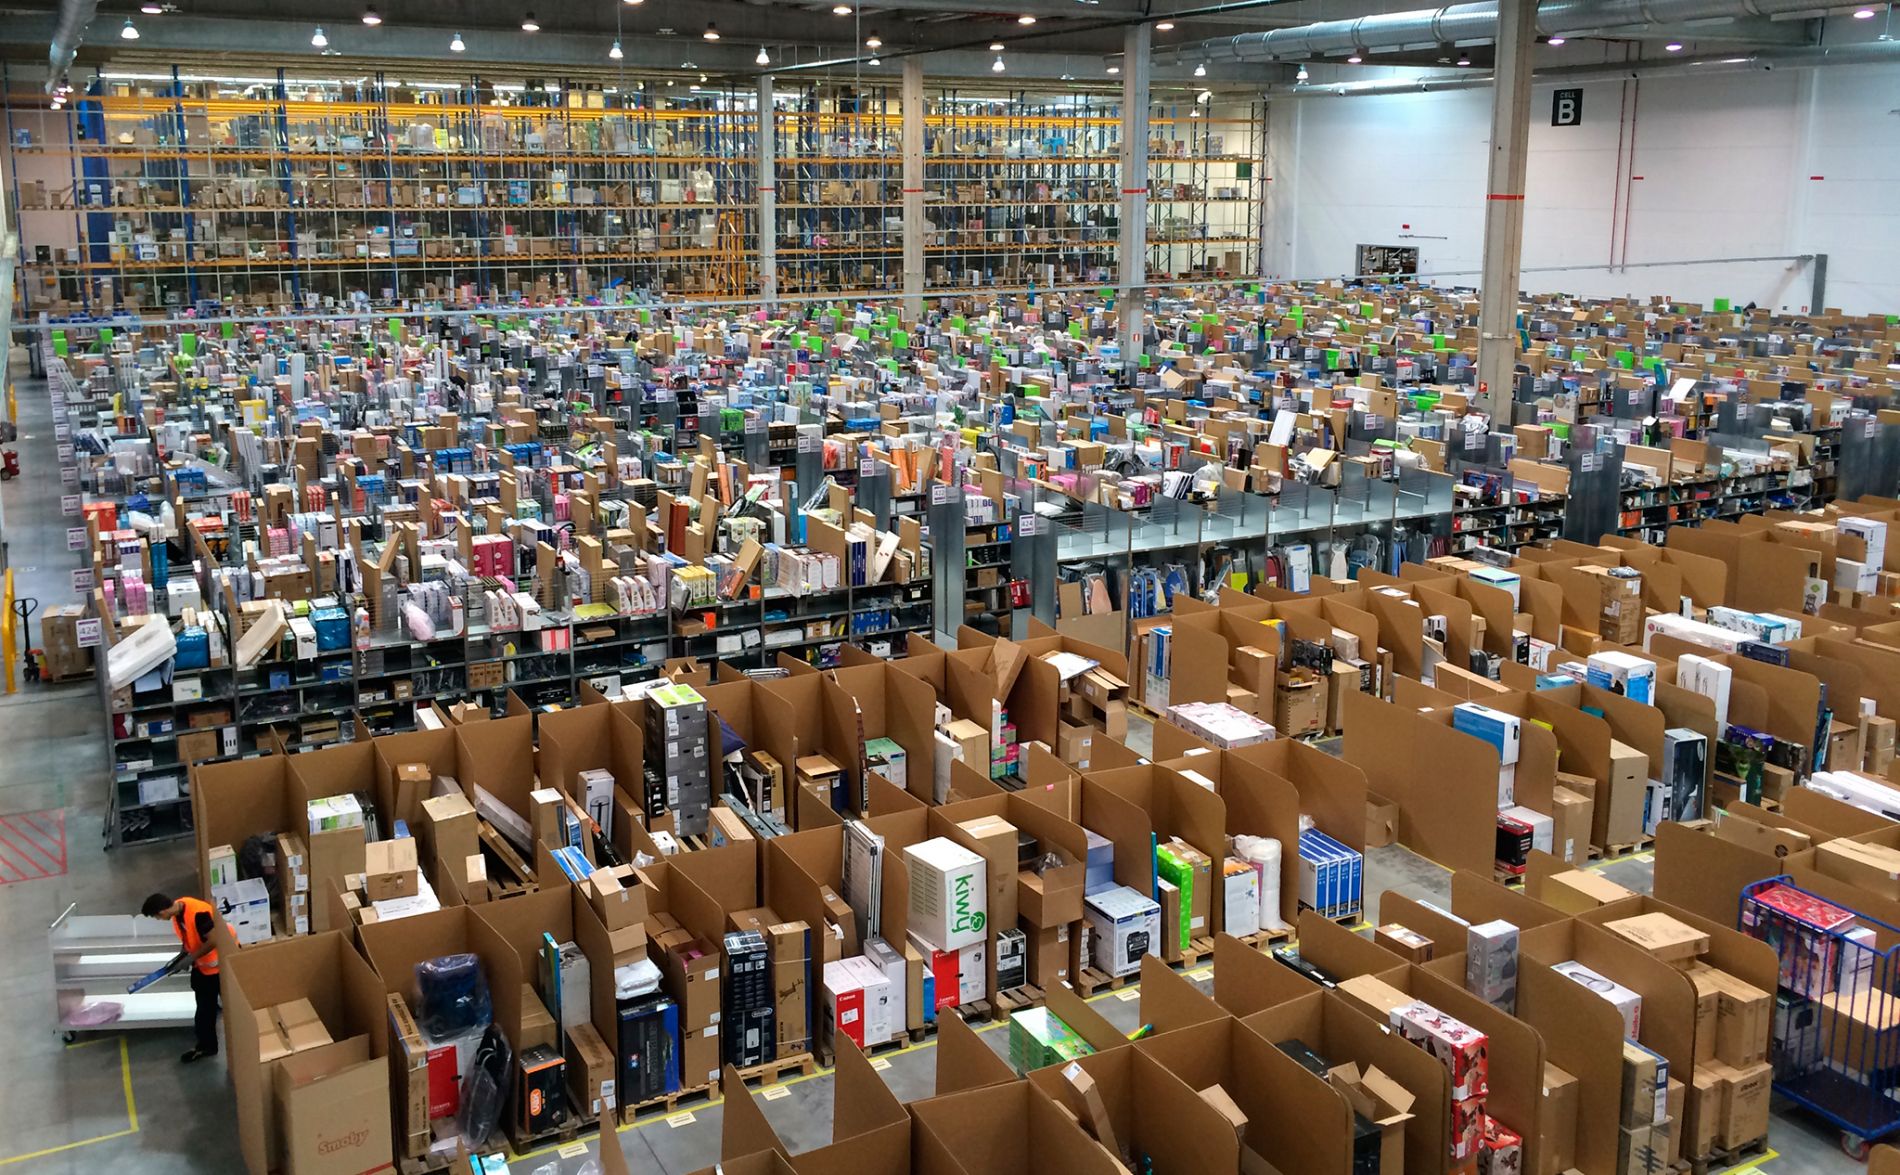 Amazon Warehouse by Alvaro Ibanez via Wikimedia Commons